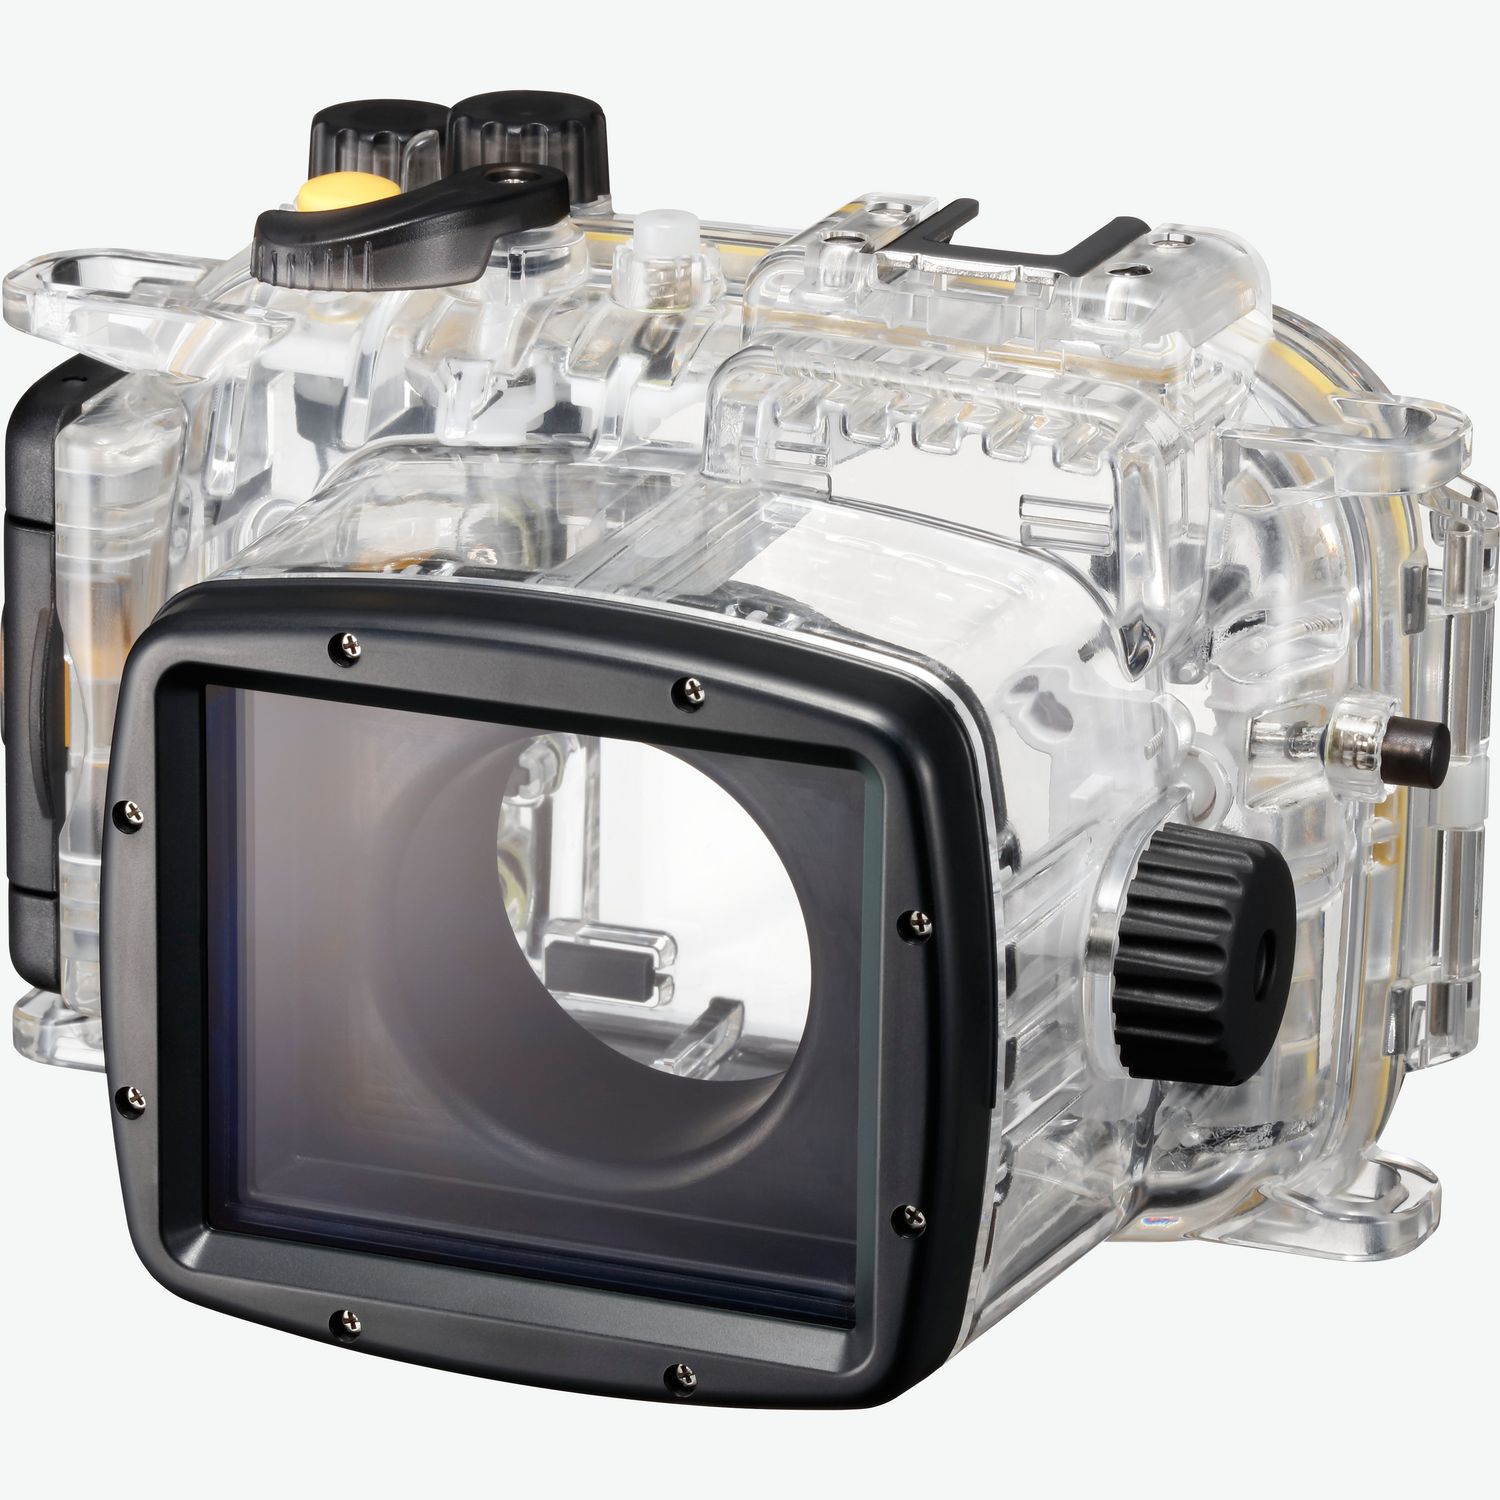 Buy Canon PowerShot G7 X Mark II Camera in Wi-Fi Cameras — Canon 